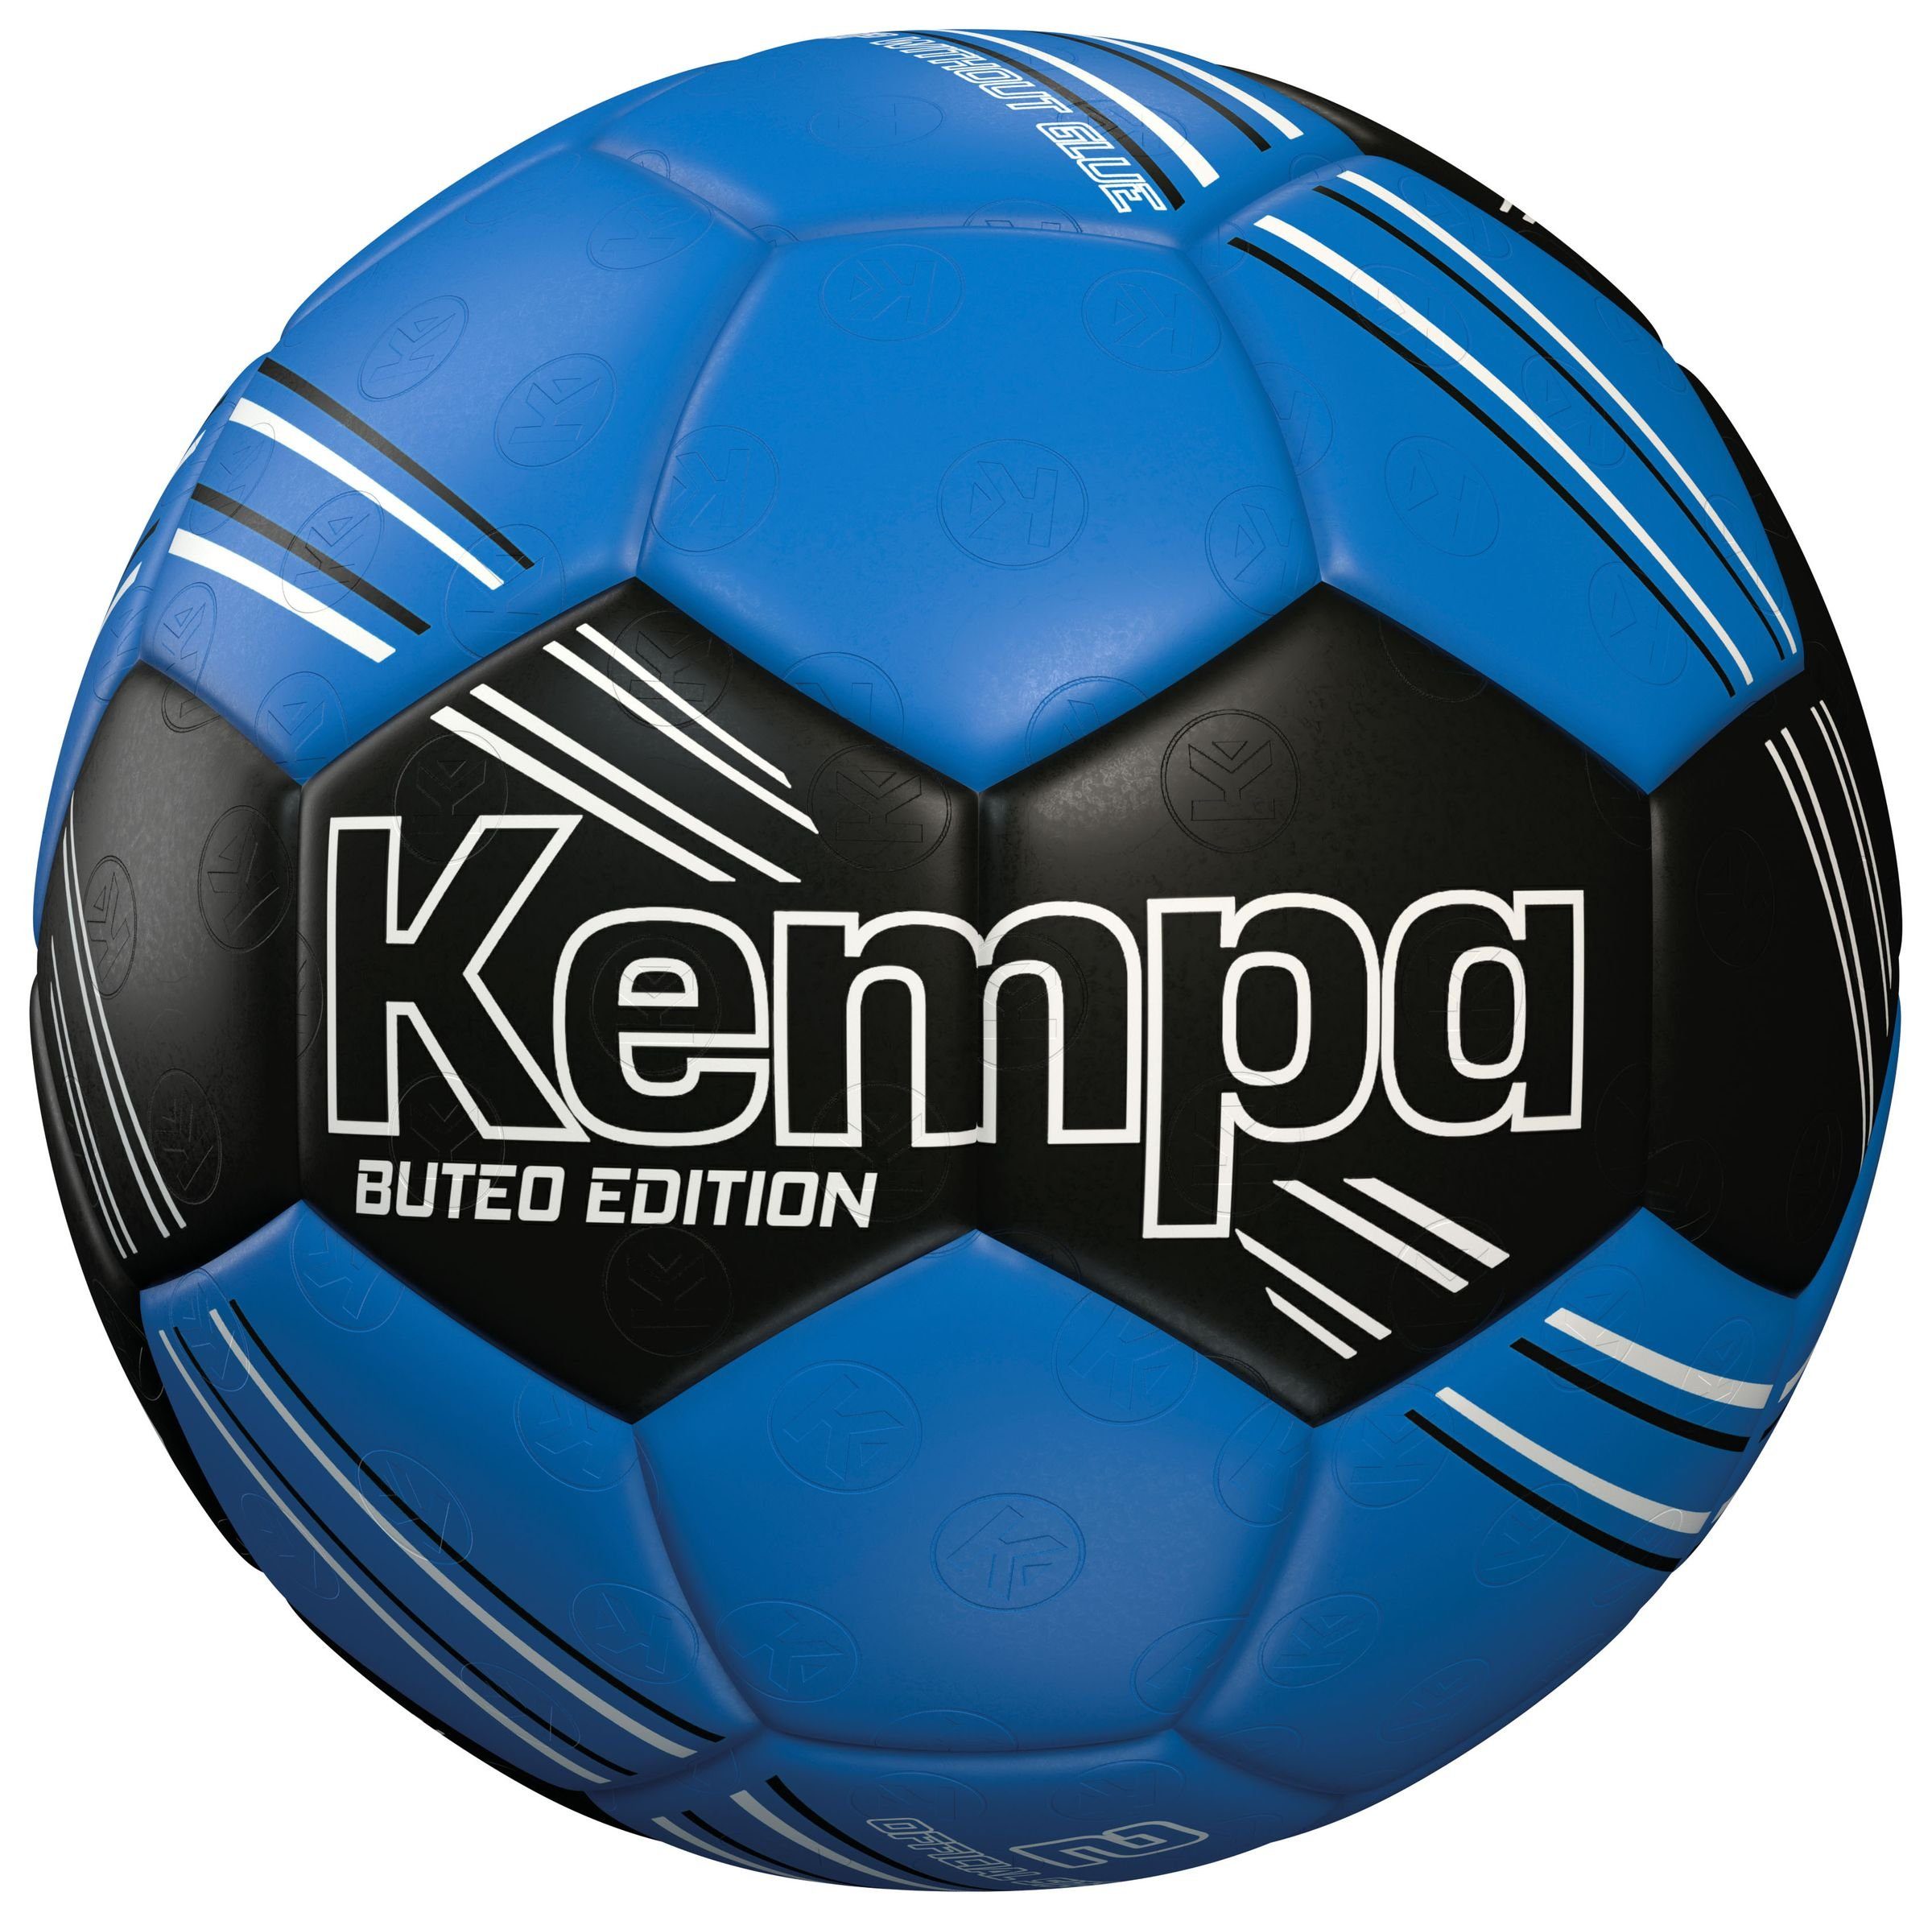 Kempa Fußball Buteo Edition